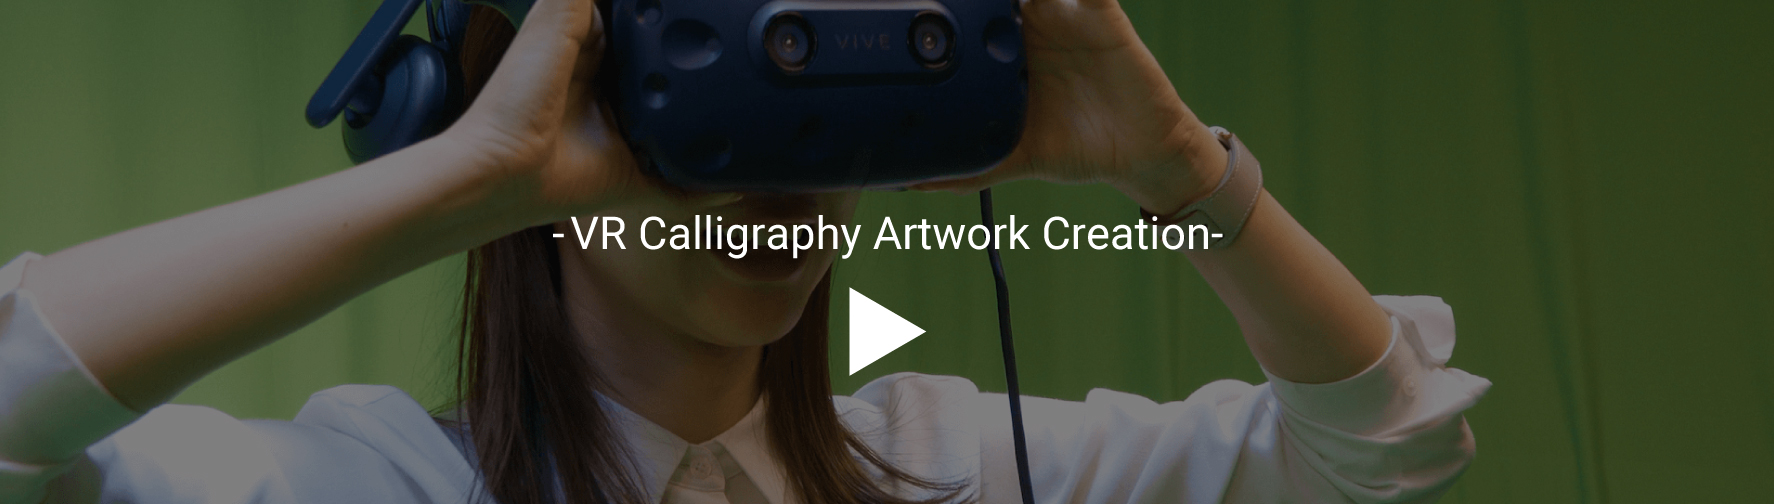 VR Calligraphy Artwork Creation